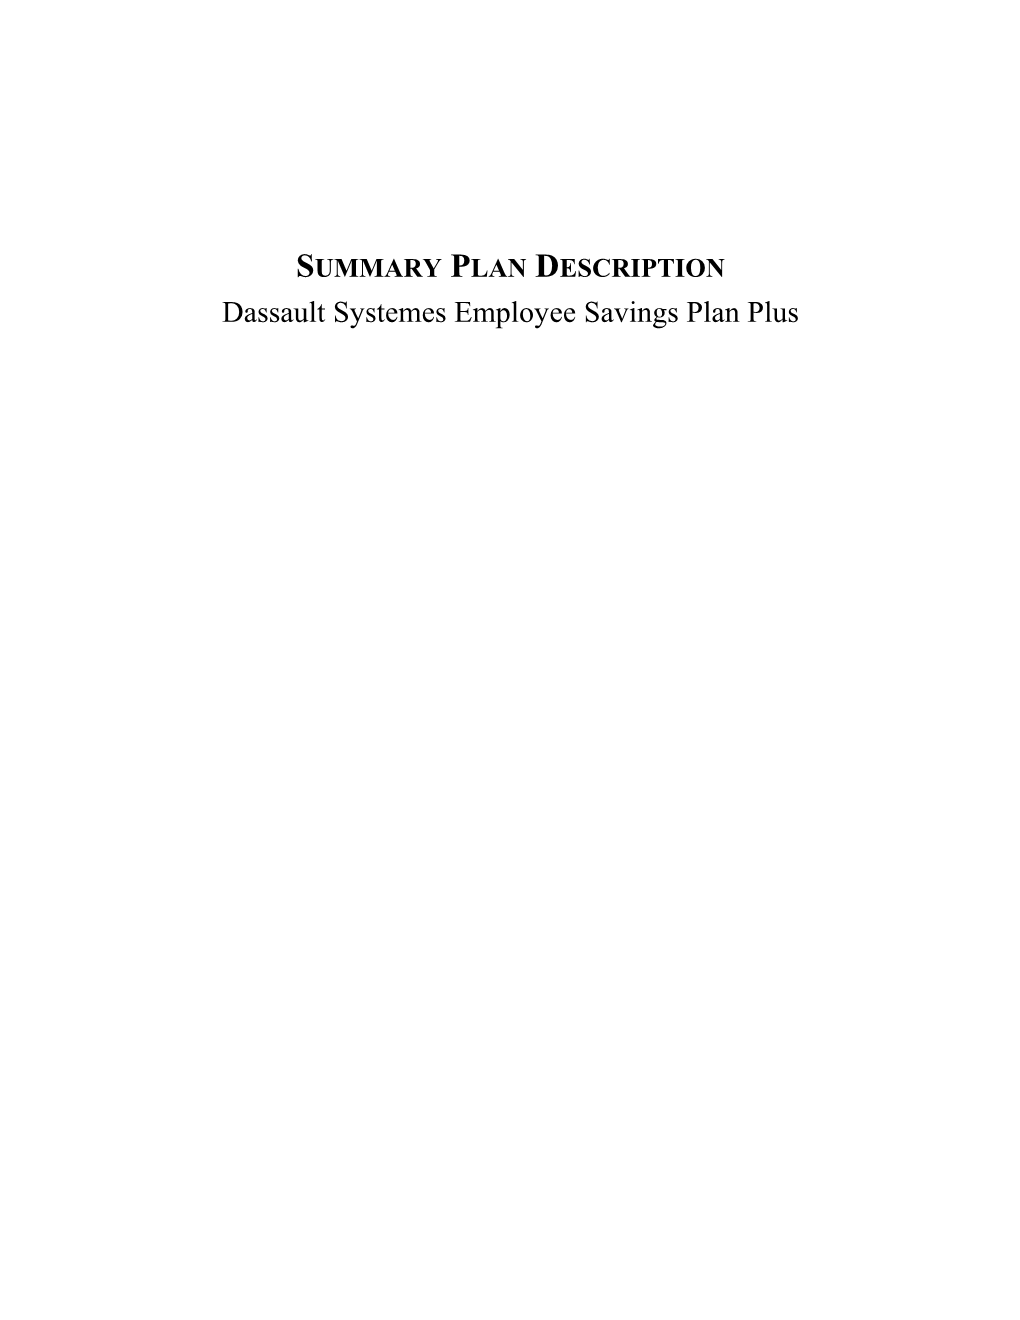 SUMMARY PLAN DESCRIPTION Dassault Systemes Employee Savings Plan Plus